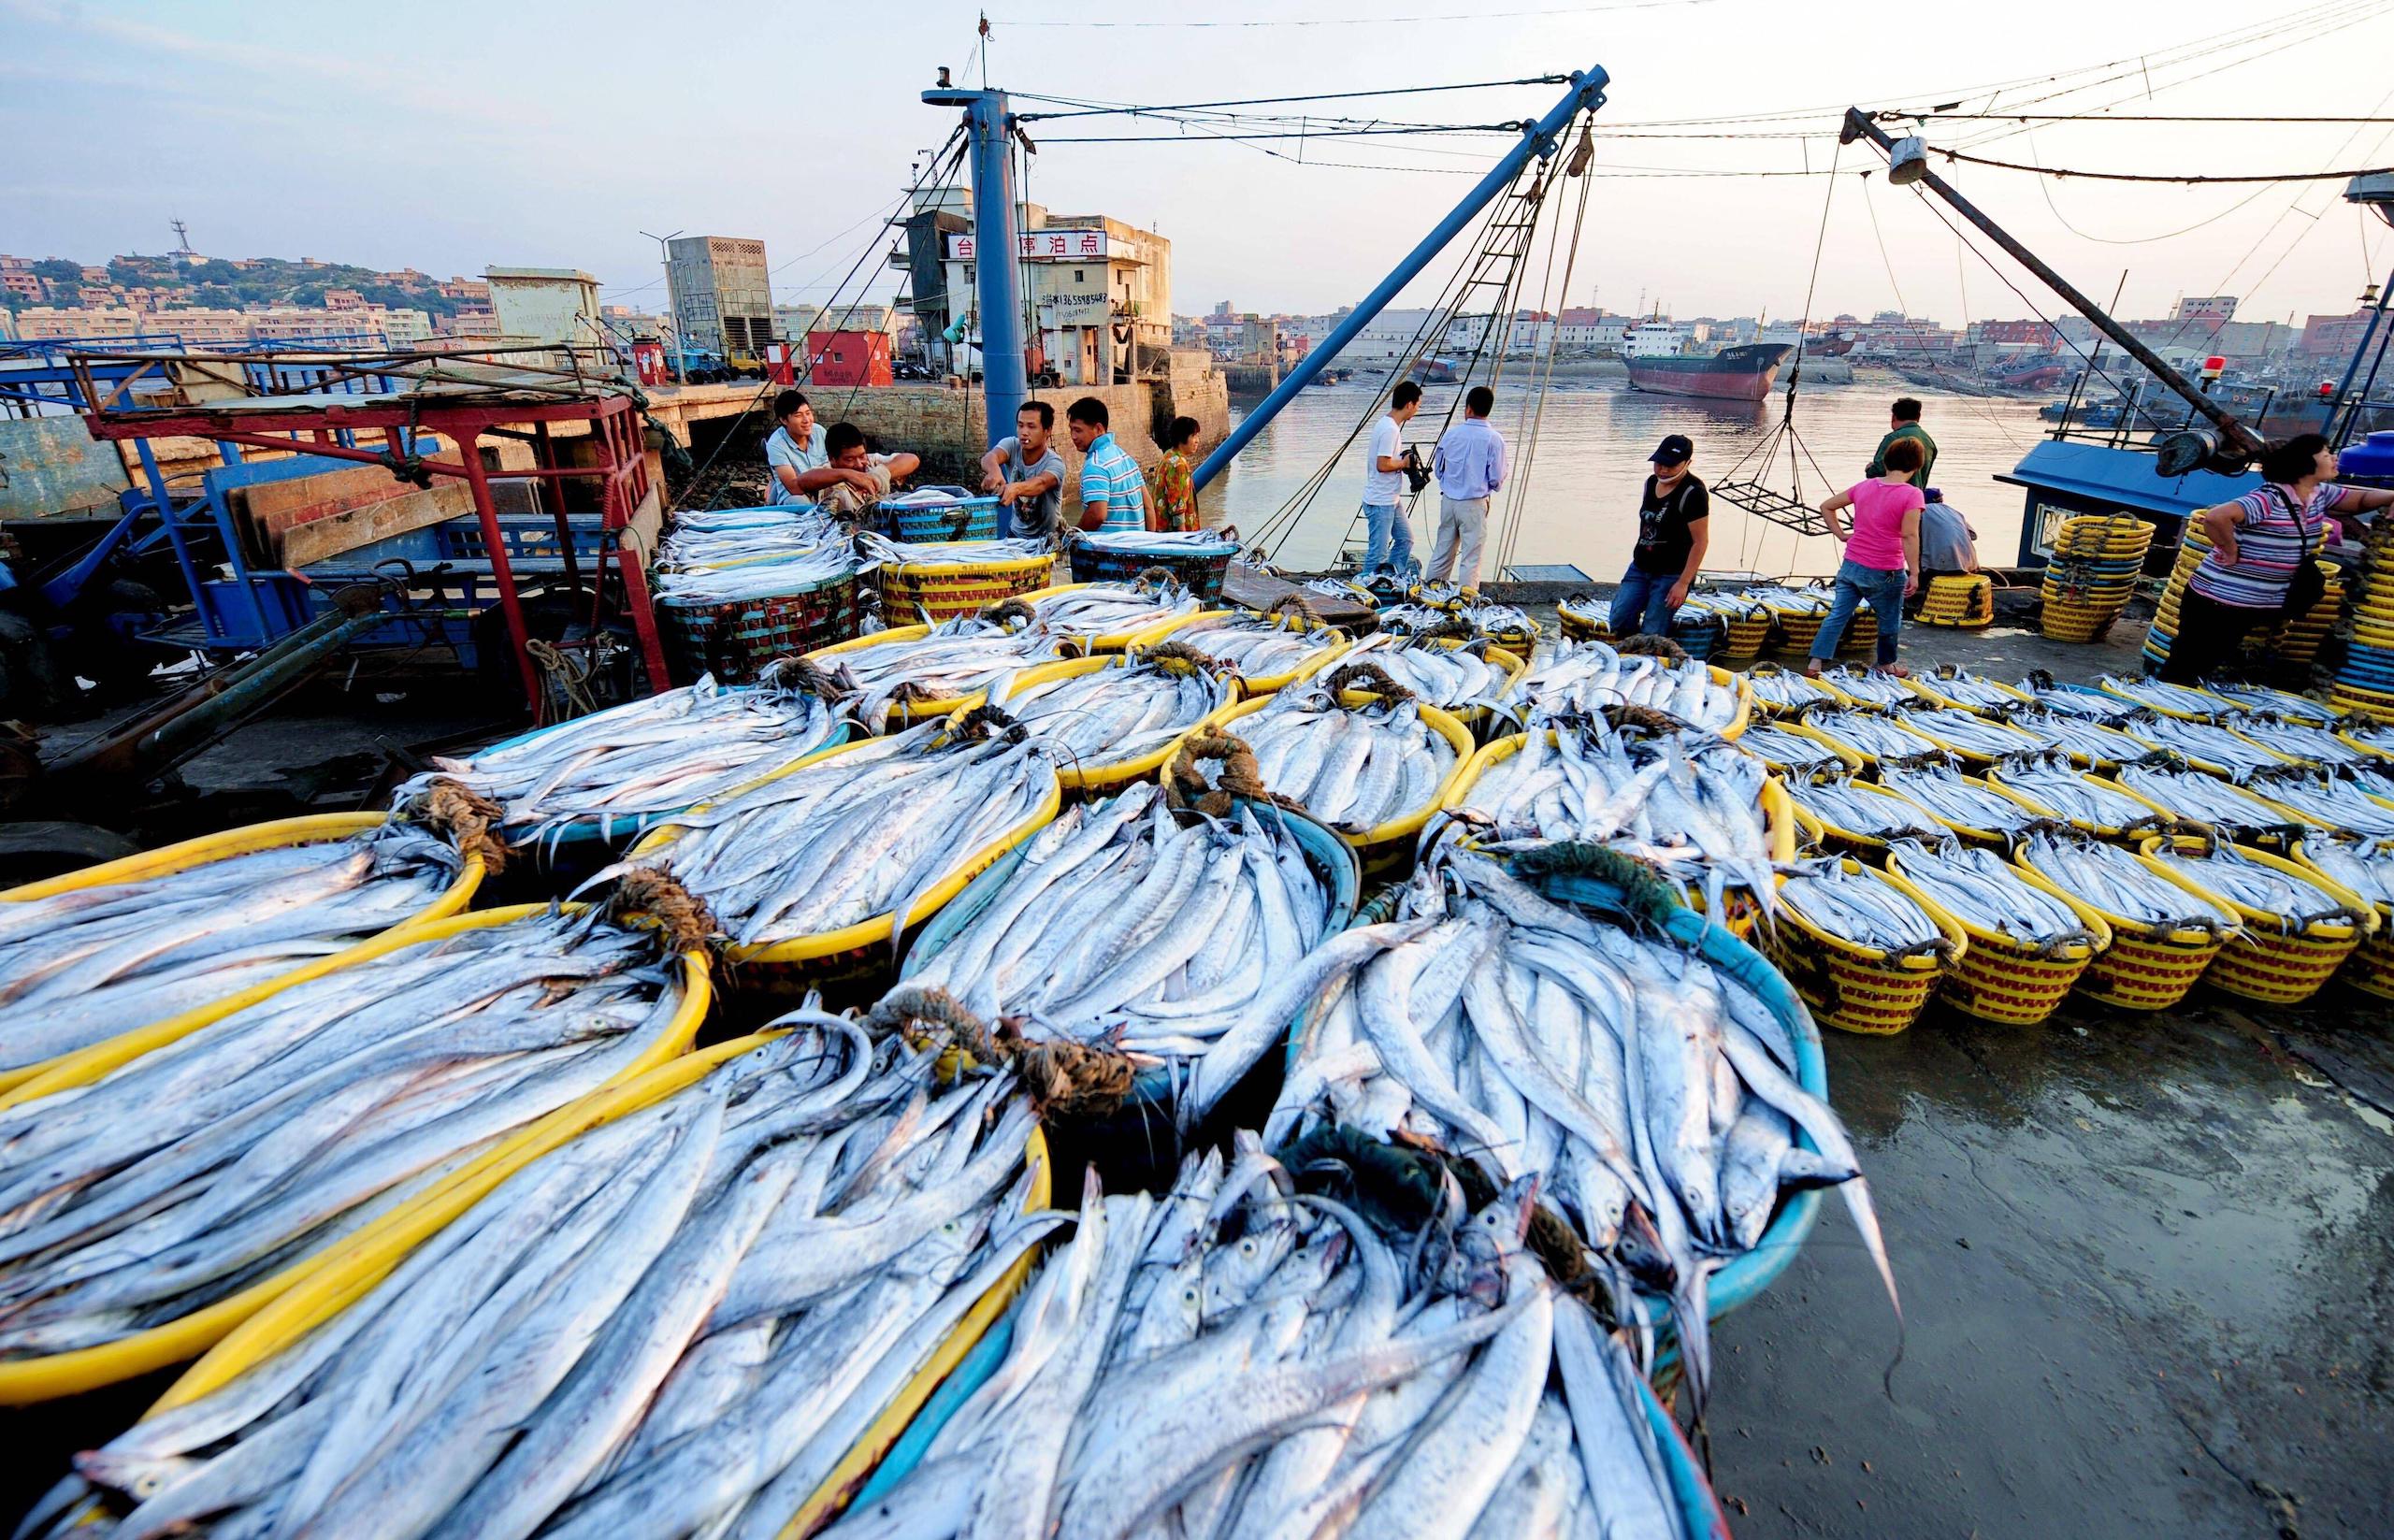 <p>在福建的一个港口，渔民们清点捕获的的带鱼。科学家指出气候变化对中国渔业的影响值得警惕，但当中仍有许多研究空白需要填补。图片来源：Zhang Guojun / Alamy</p>